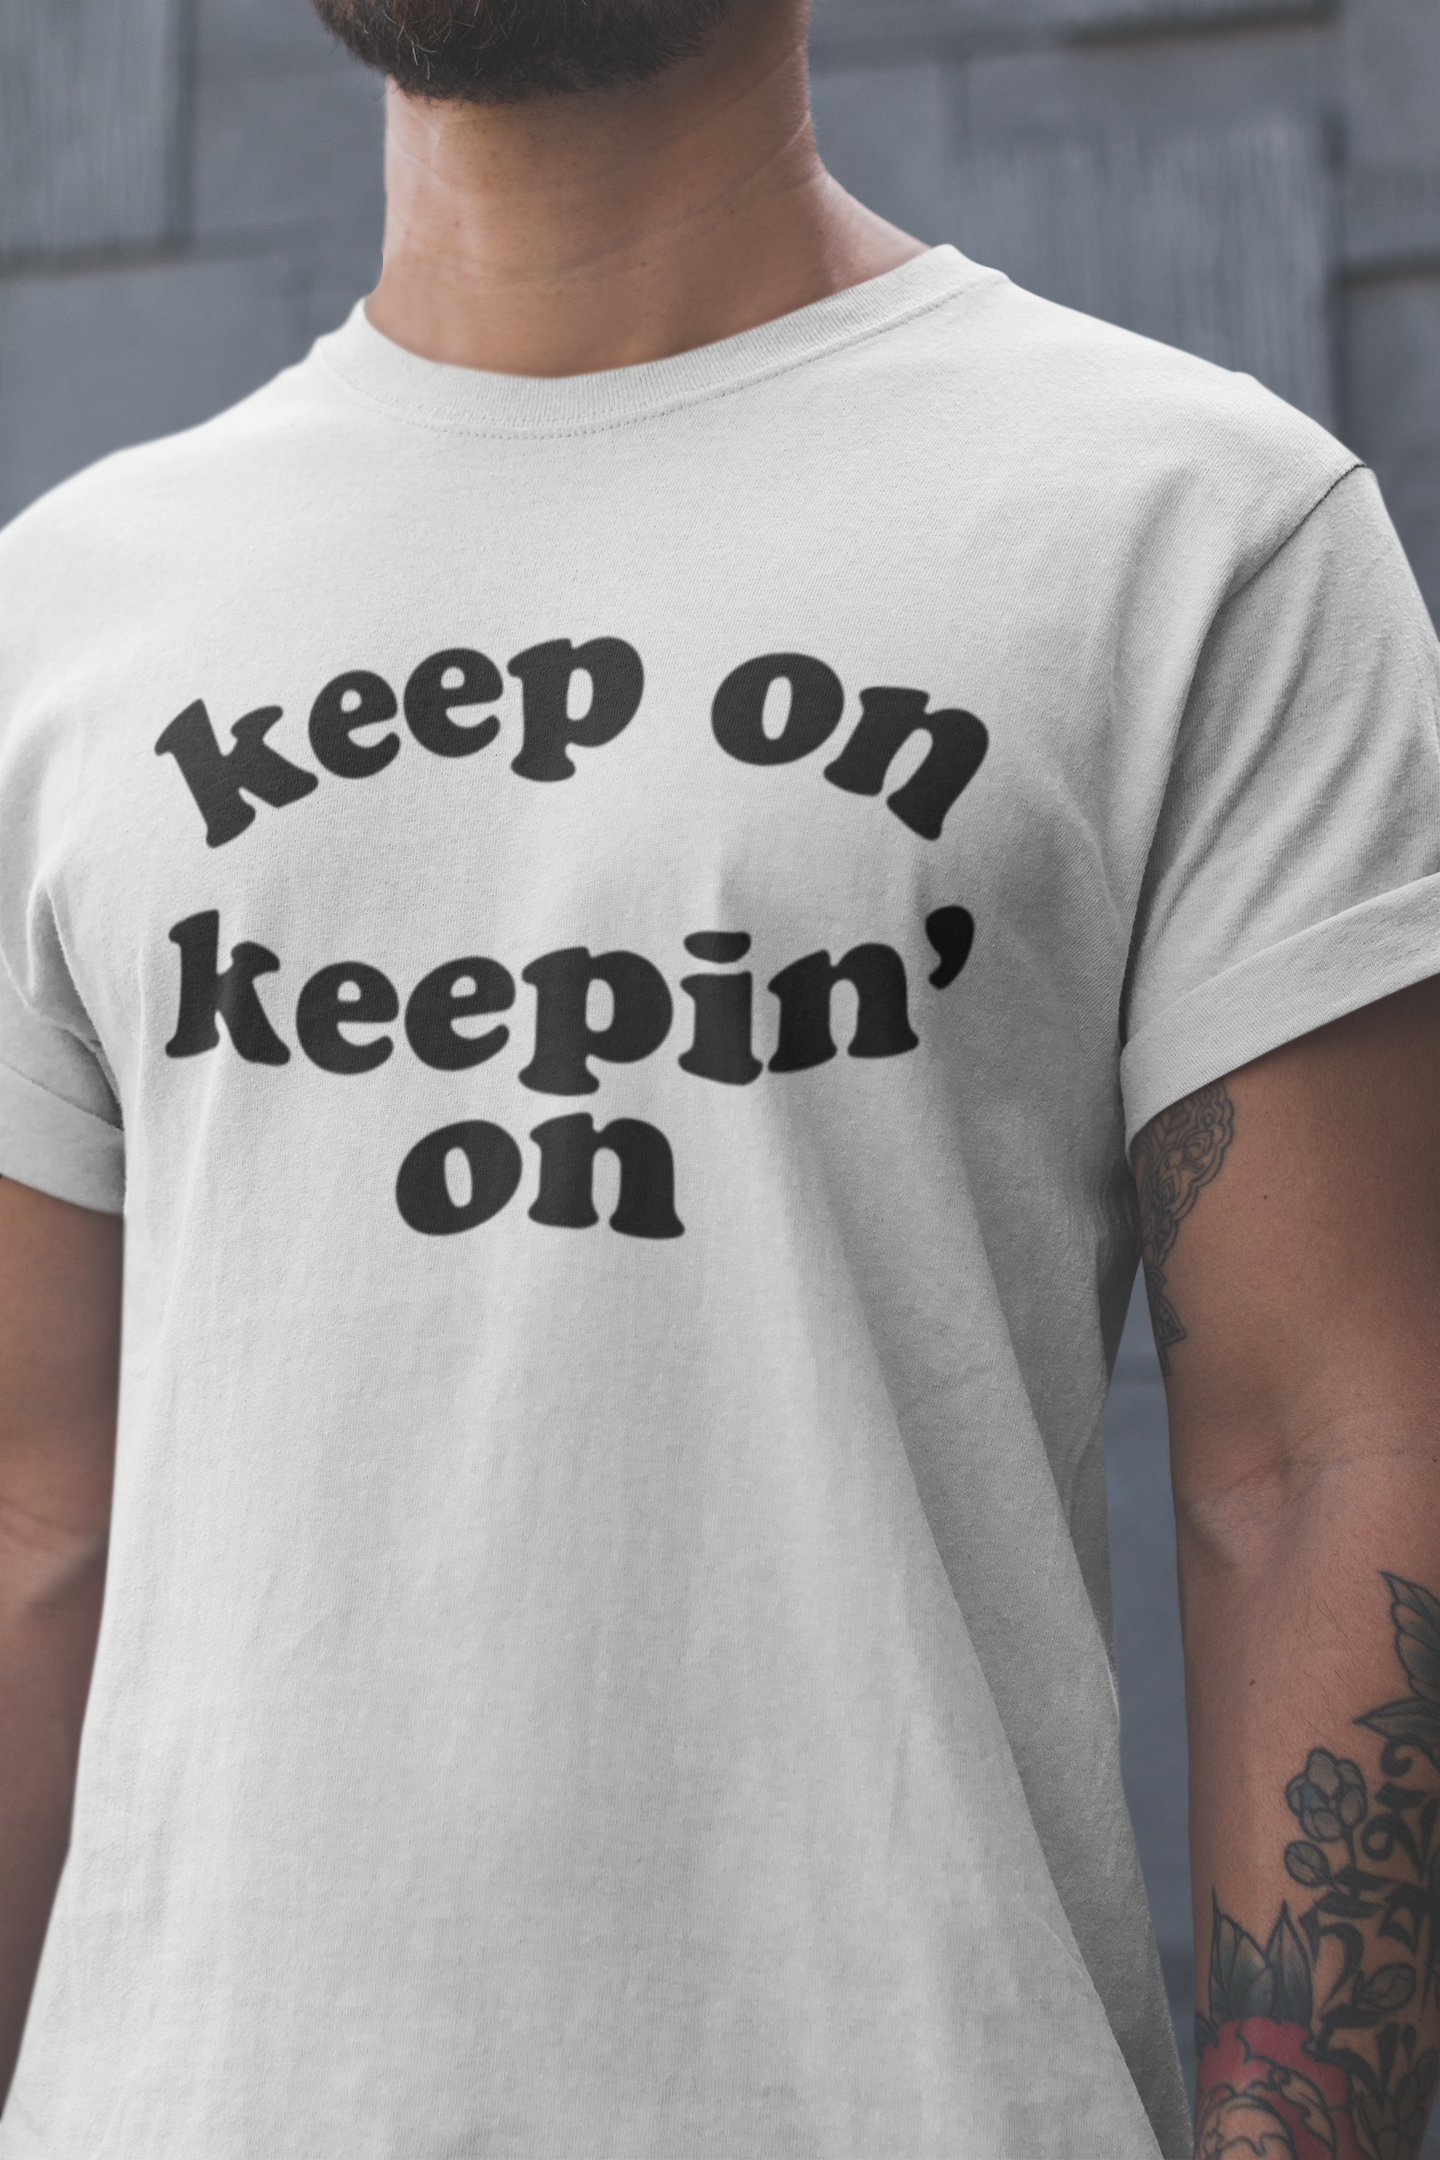 Keep on Keepin' On T-Shirt - Retro Groove